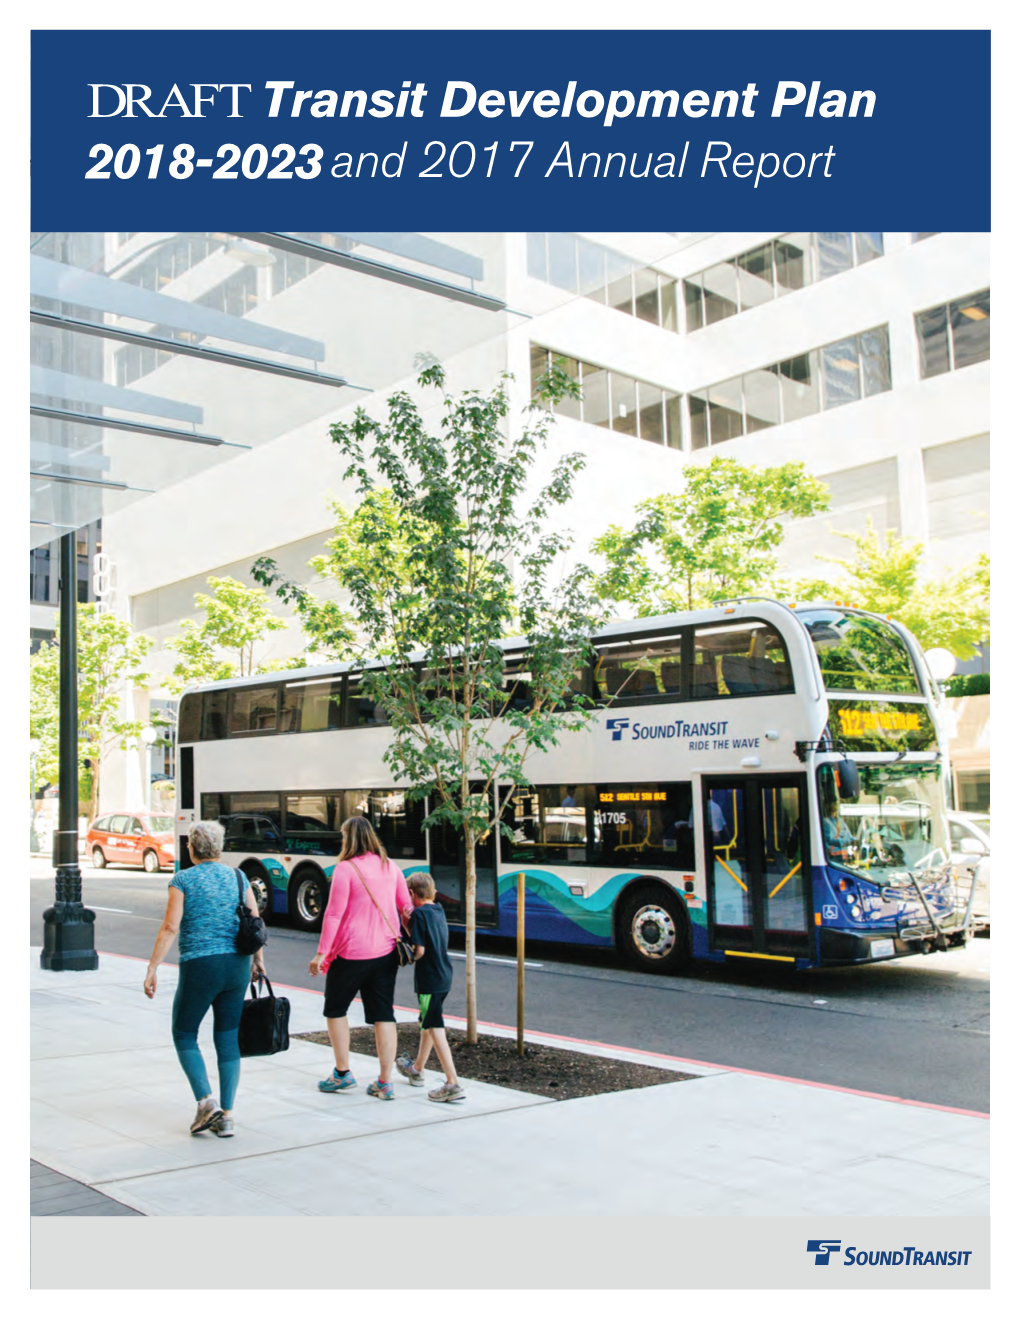 DRAFT Sound Transit DRAFT Transit Development Plan 2018-2023 and 2017 Annual Report Public Hearing